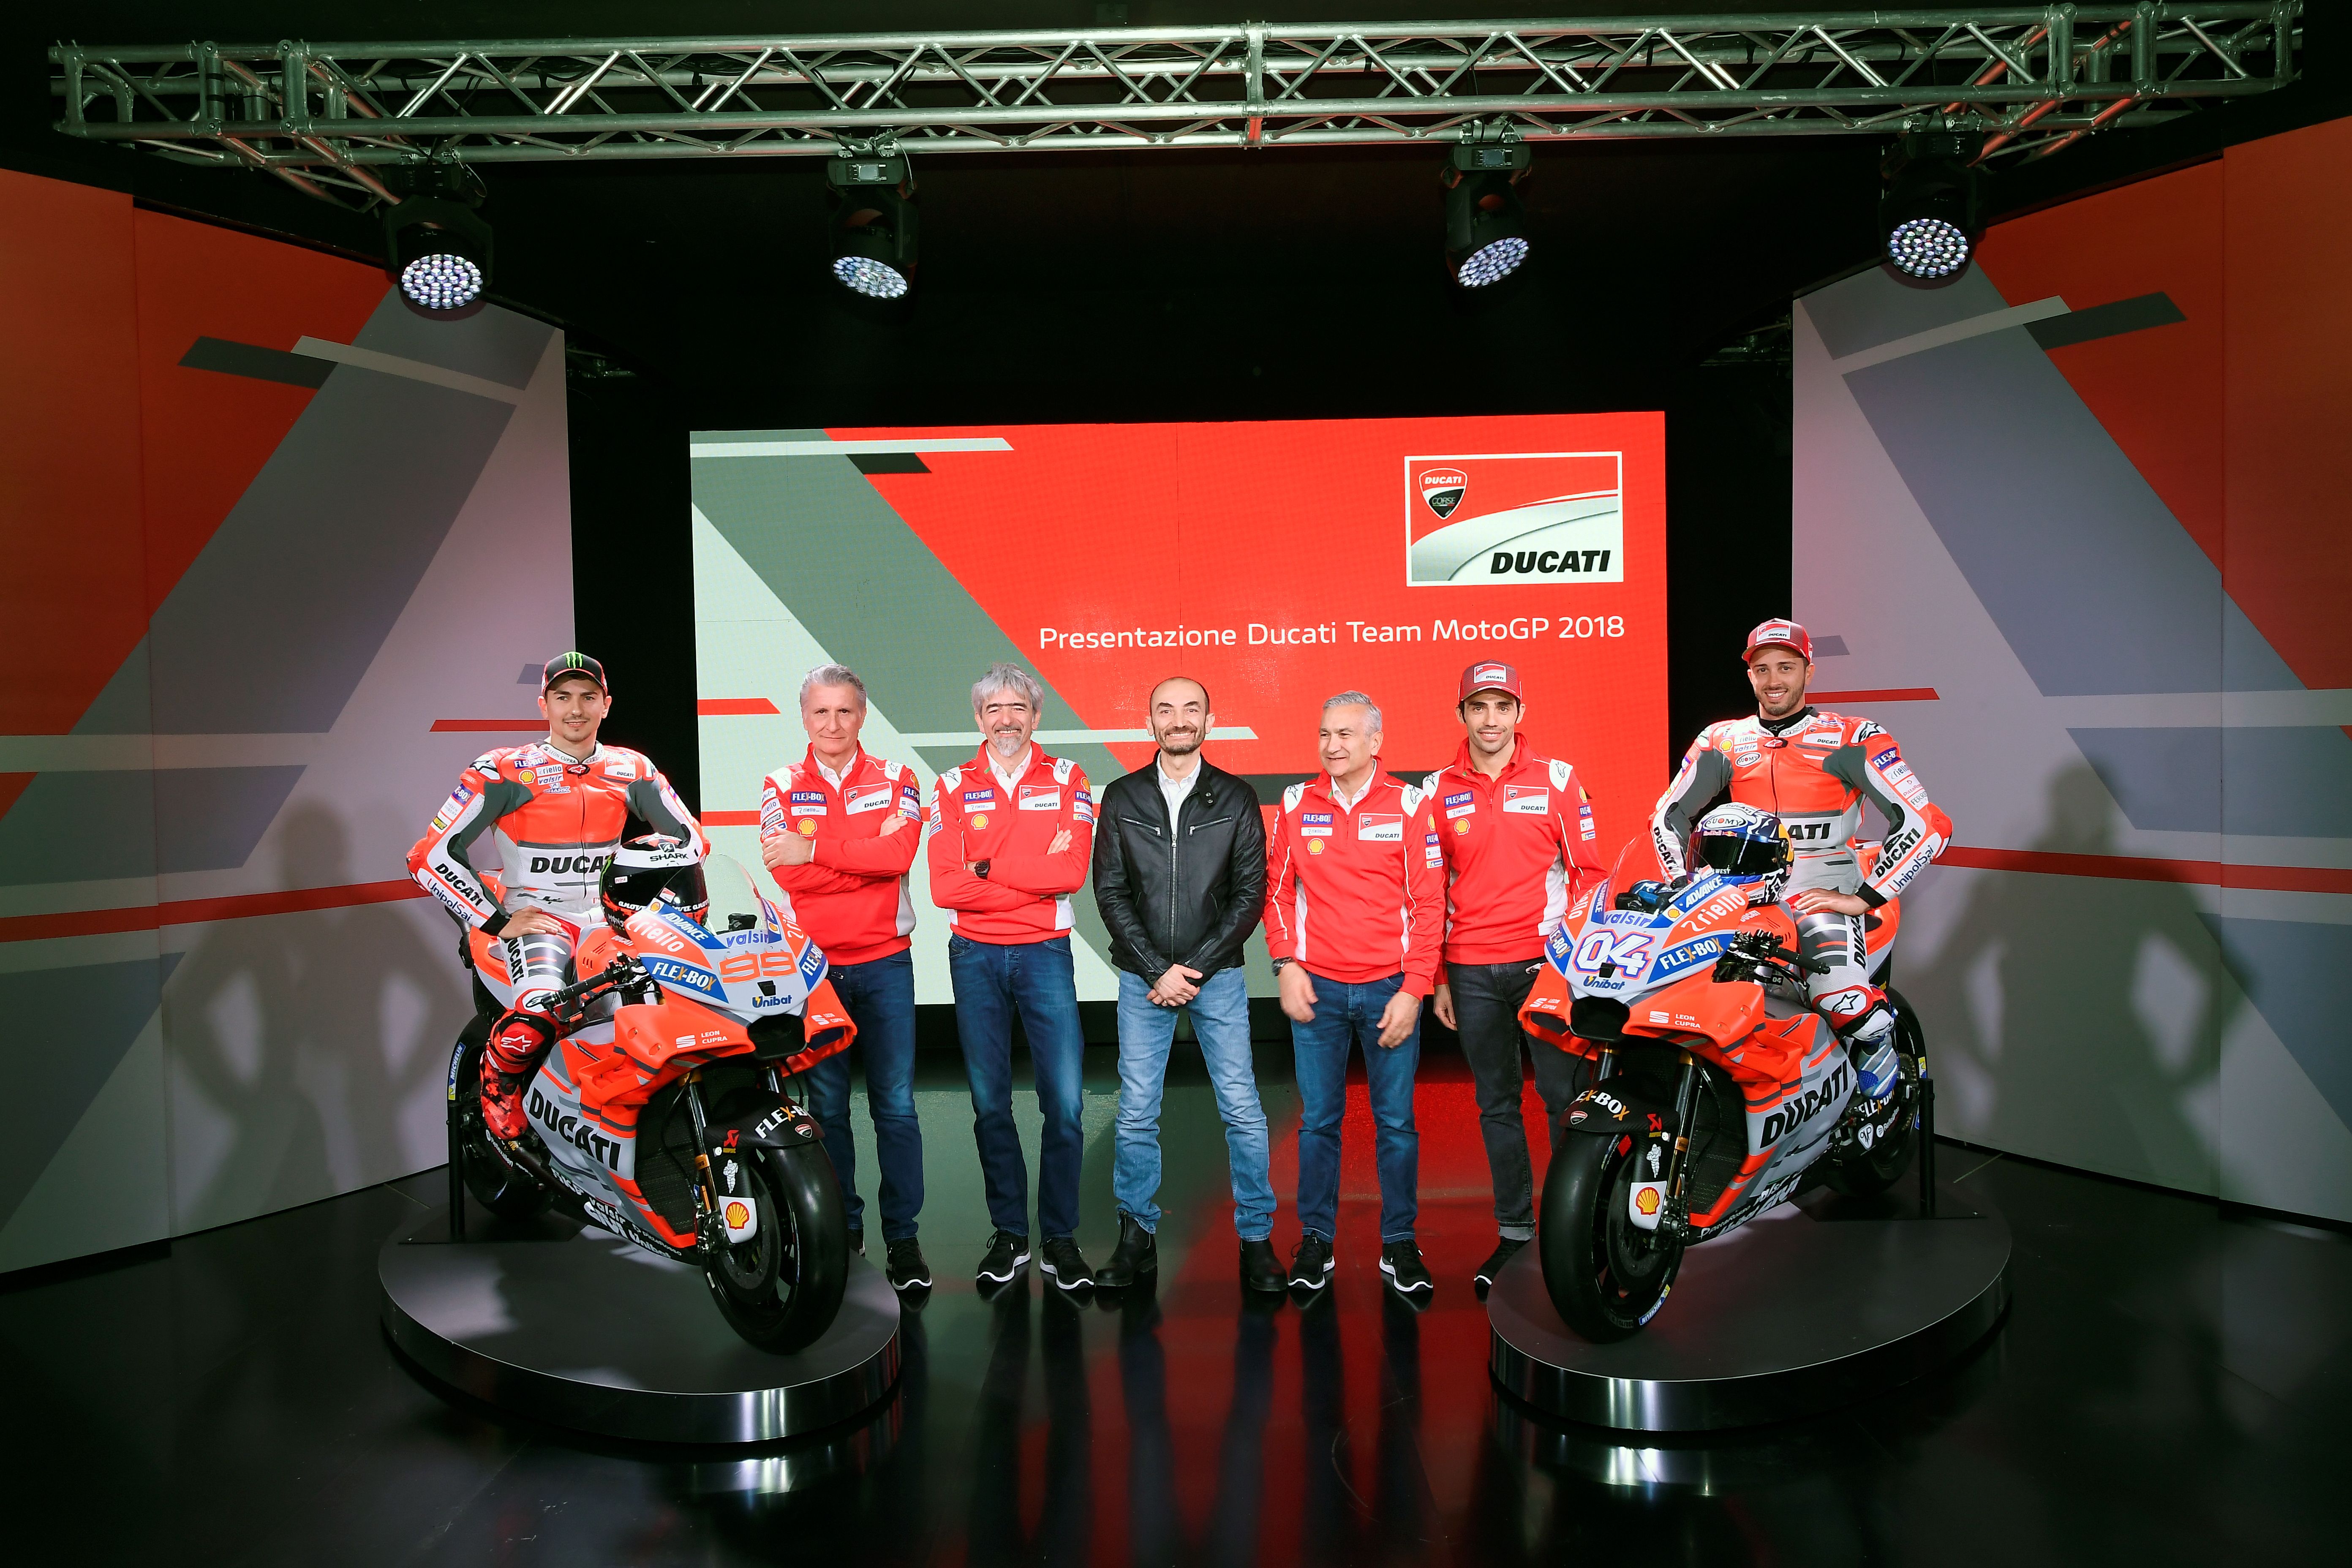 Ducati: V roce 2018 budeme útočit na titul